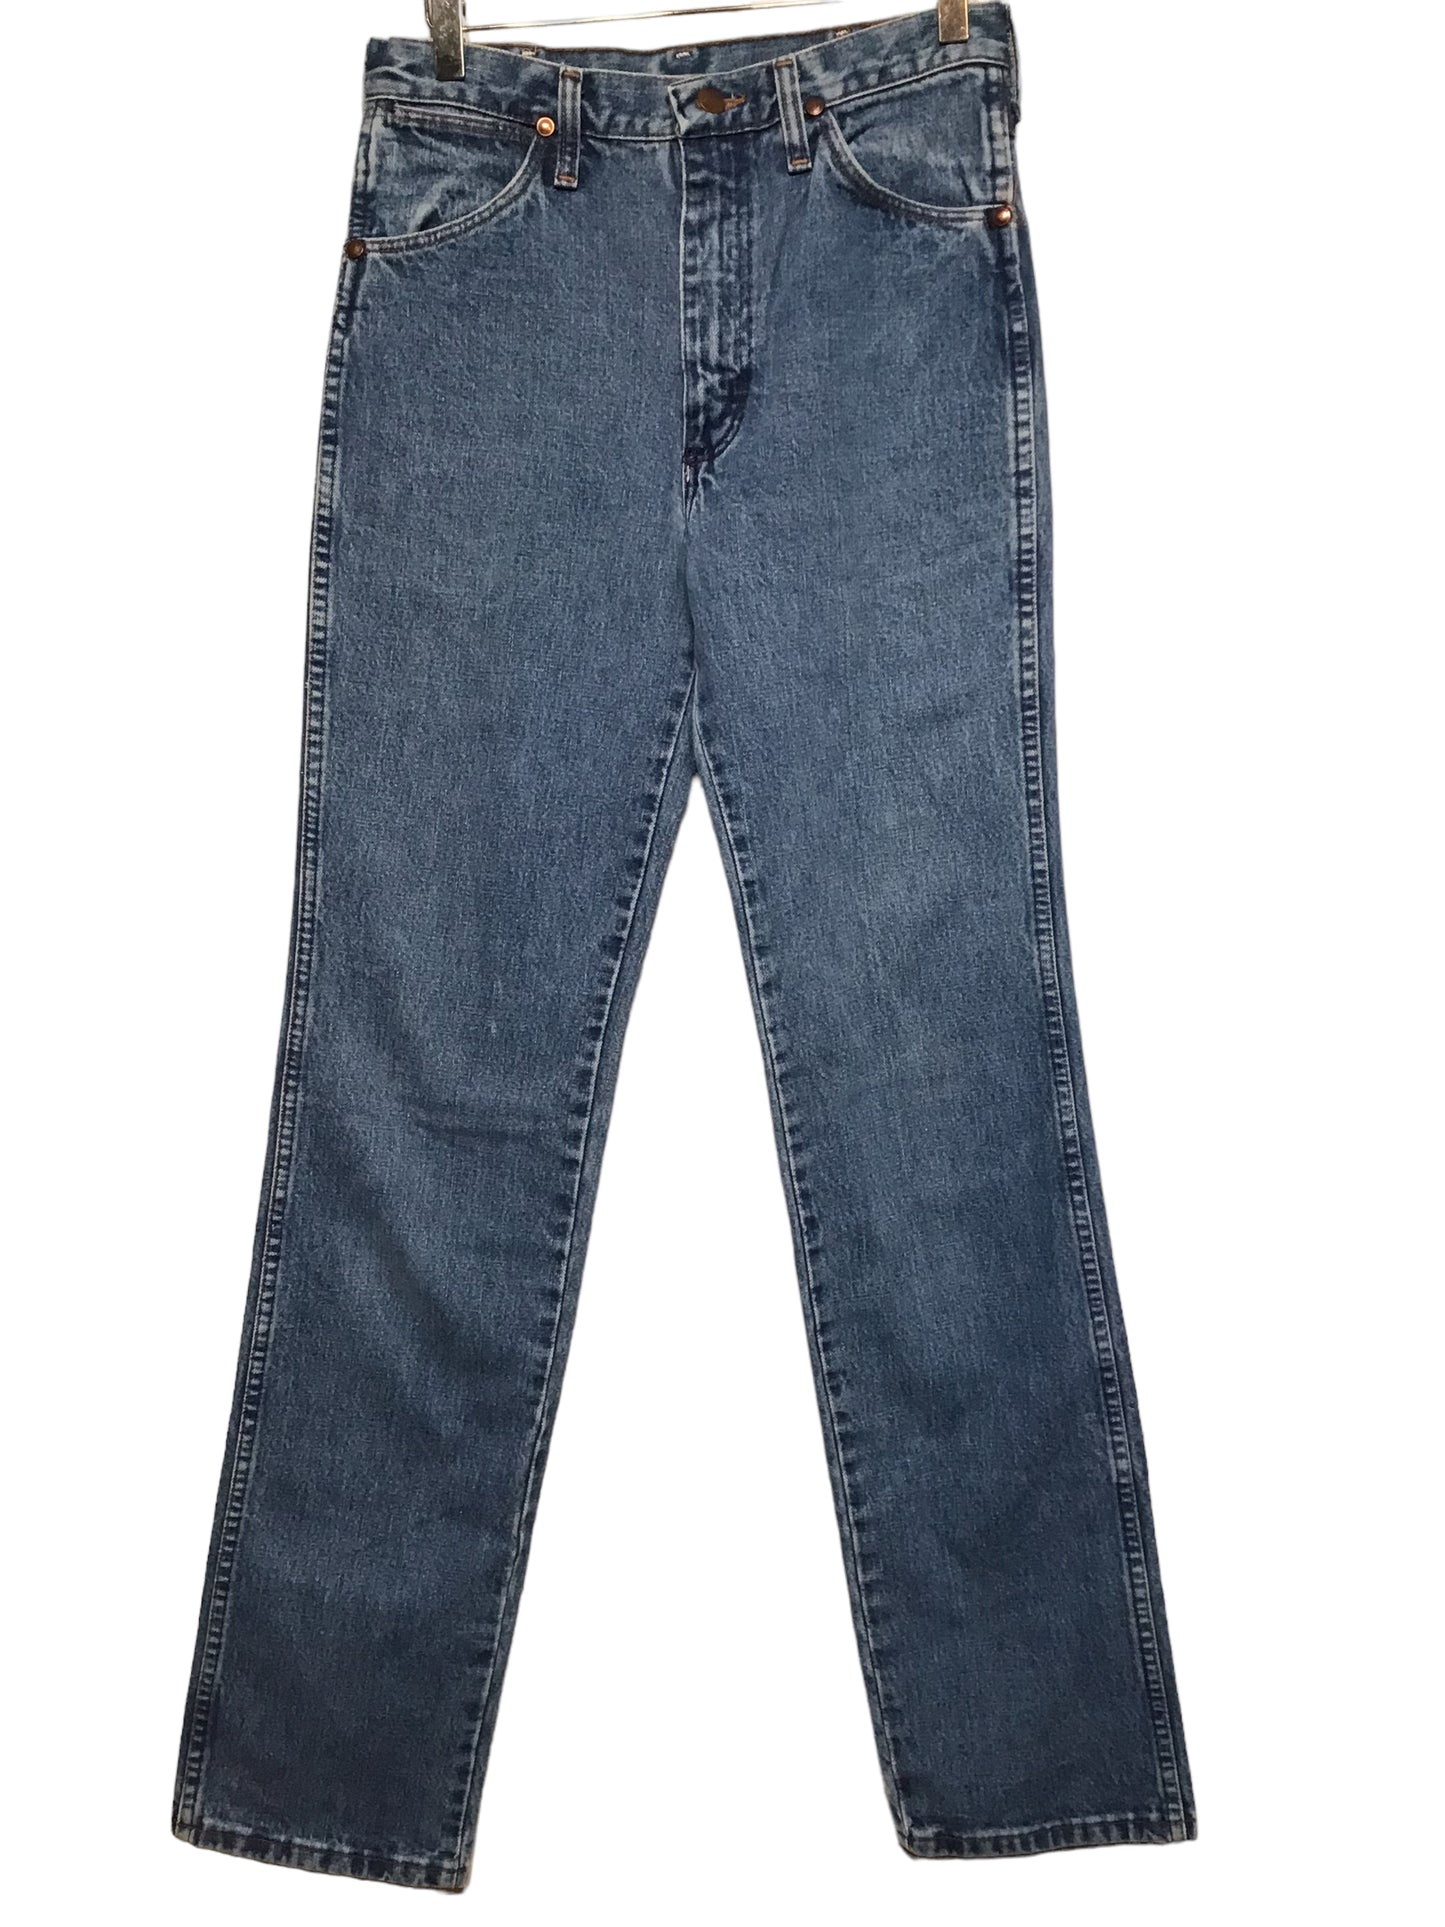 Wrangler Jeans (29x33)